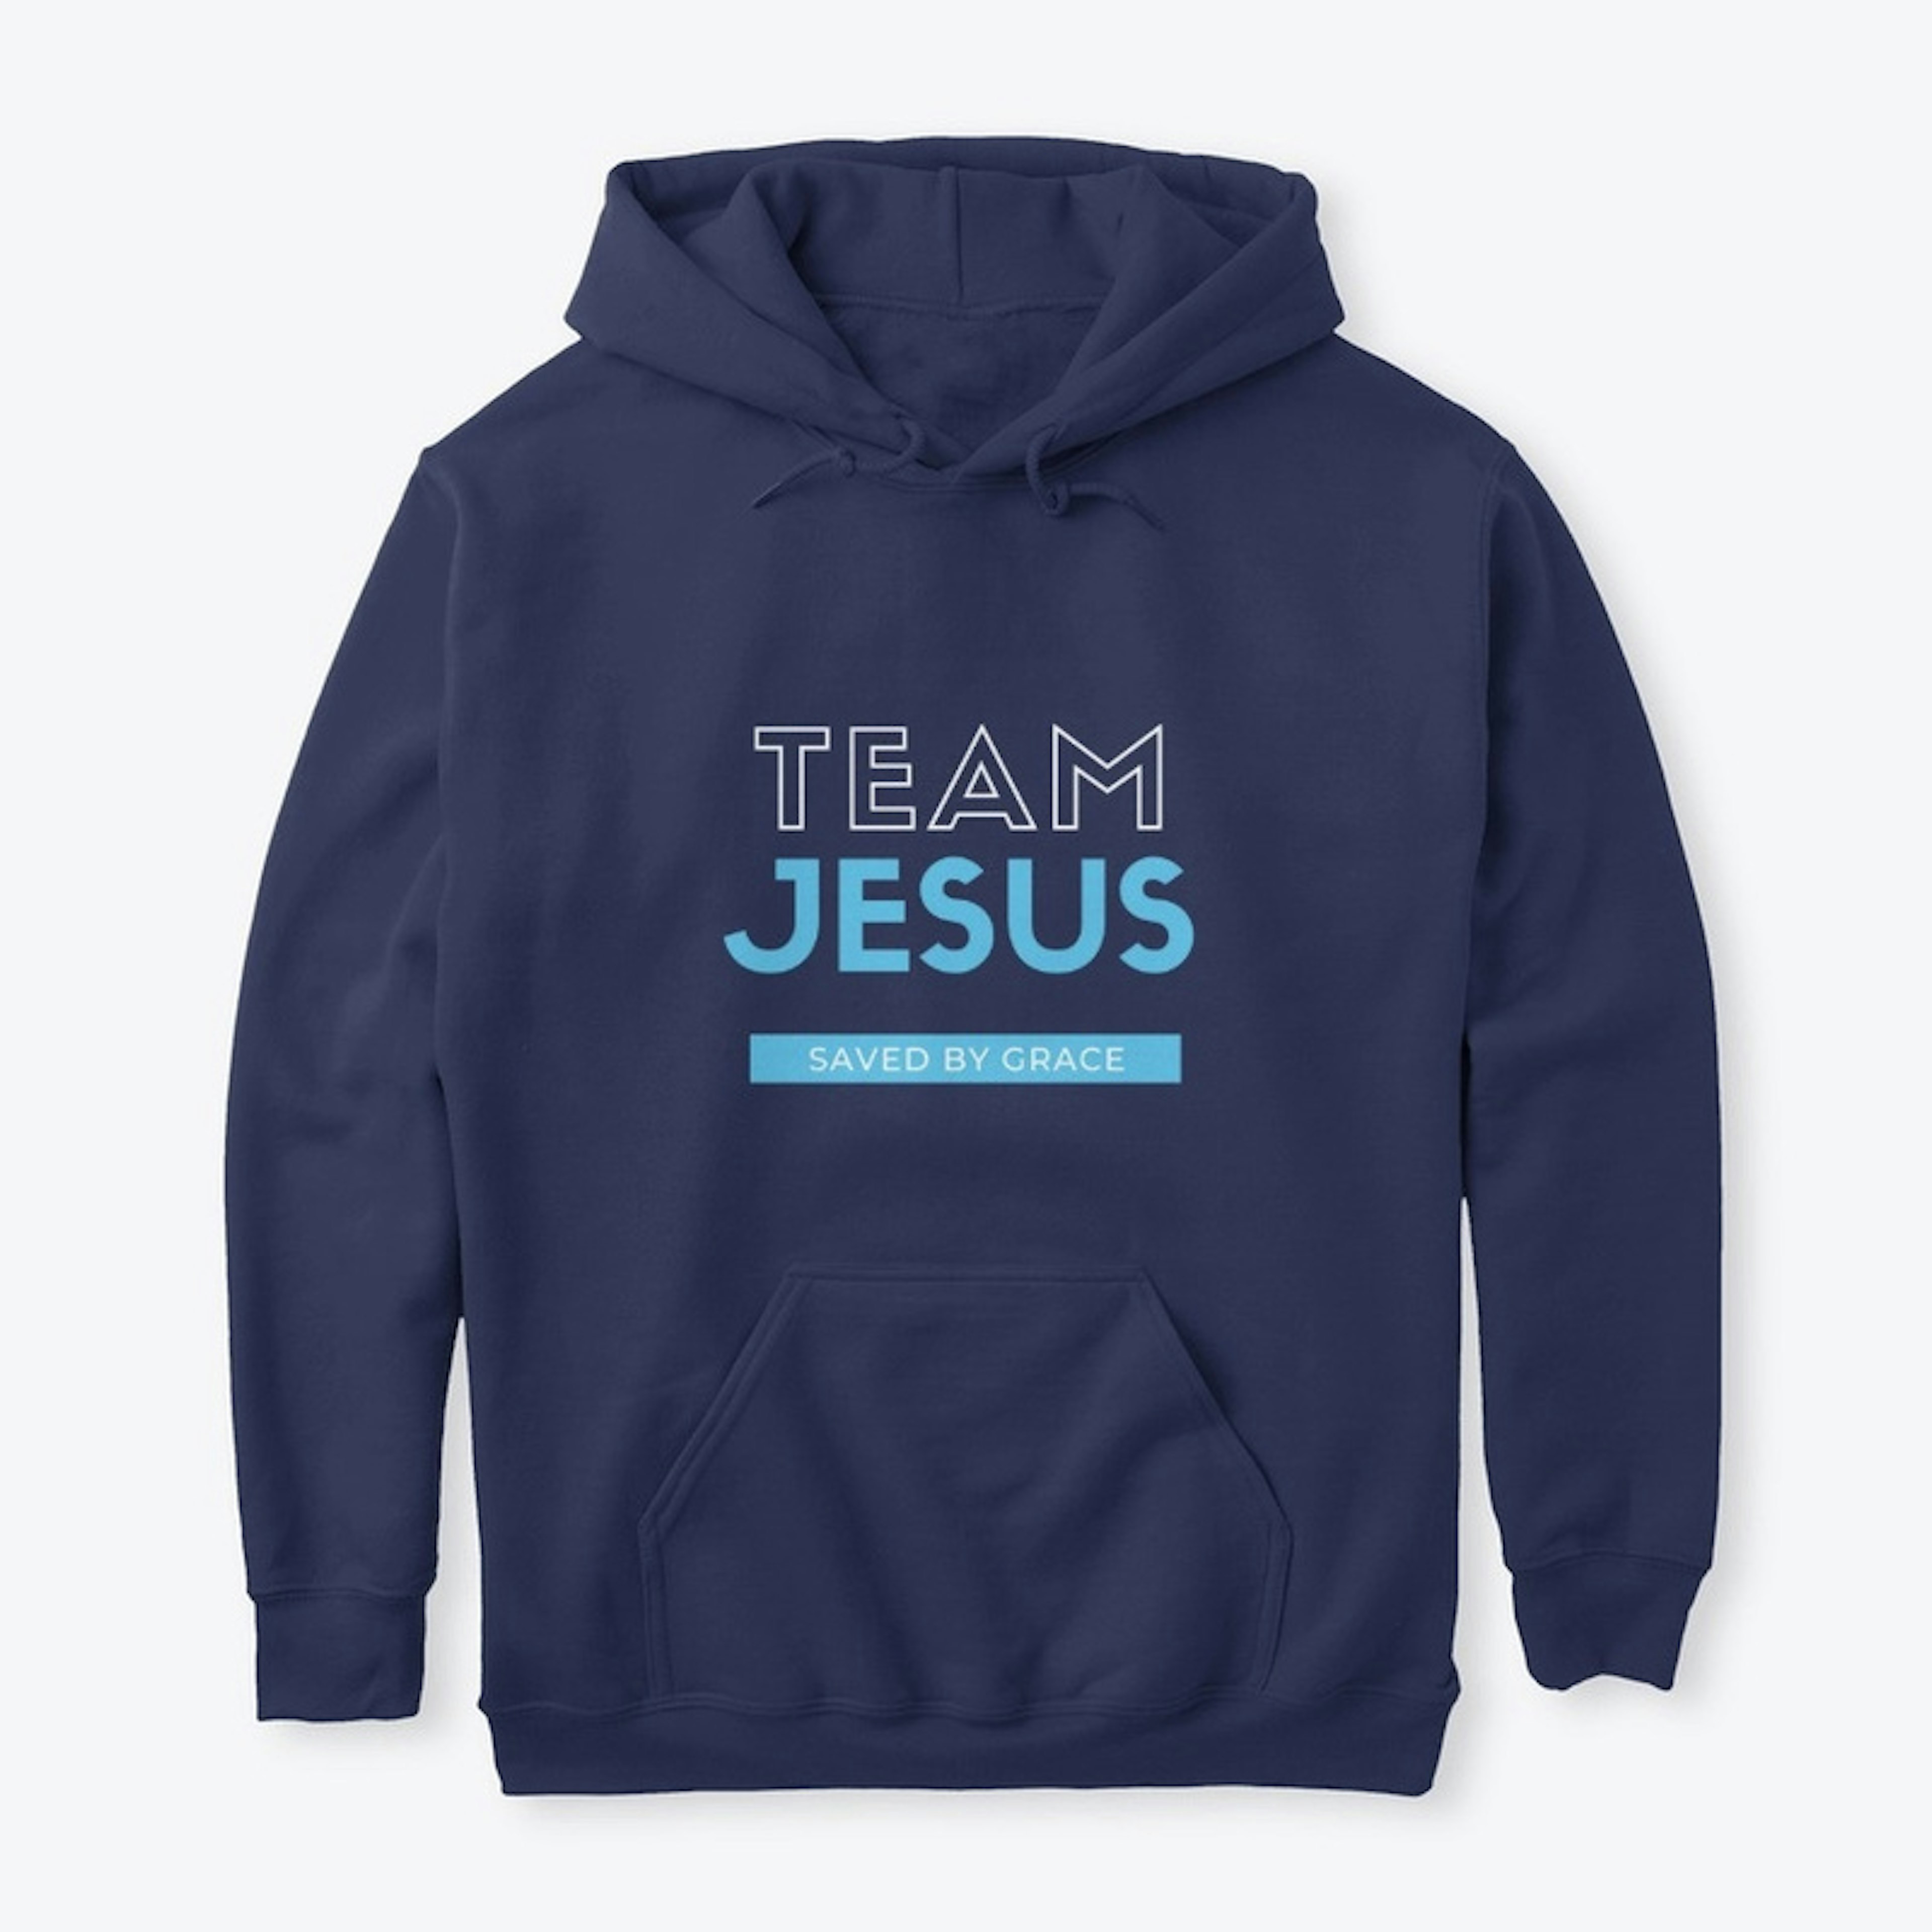 Team Jesus Saved by Grace